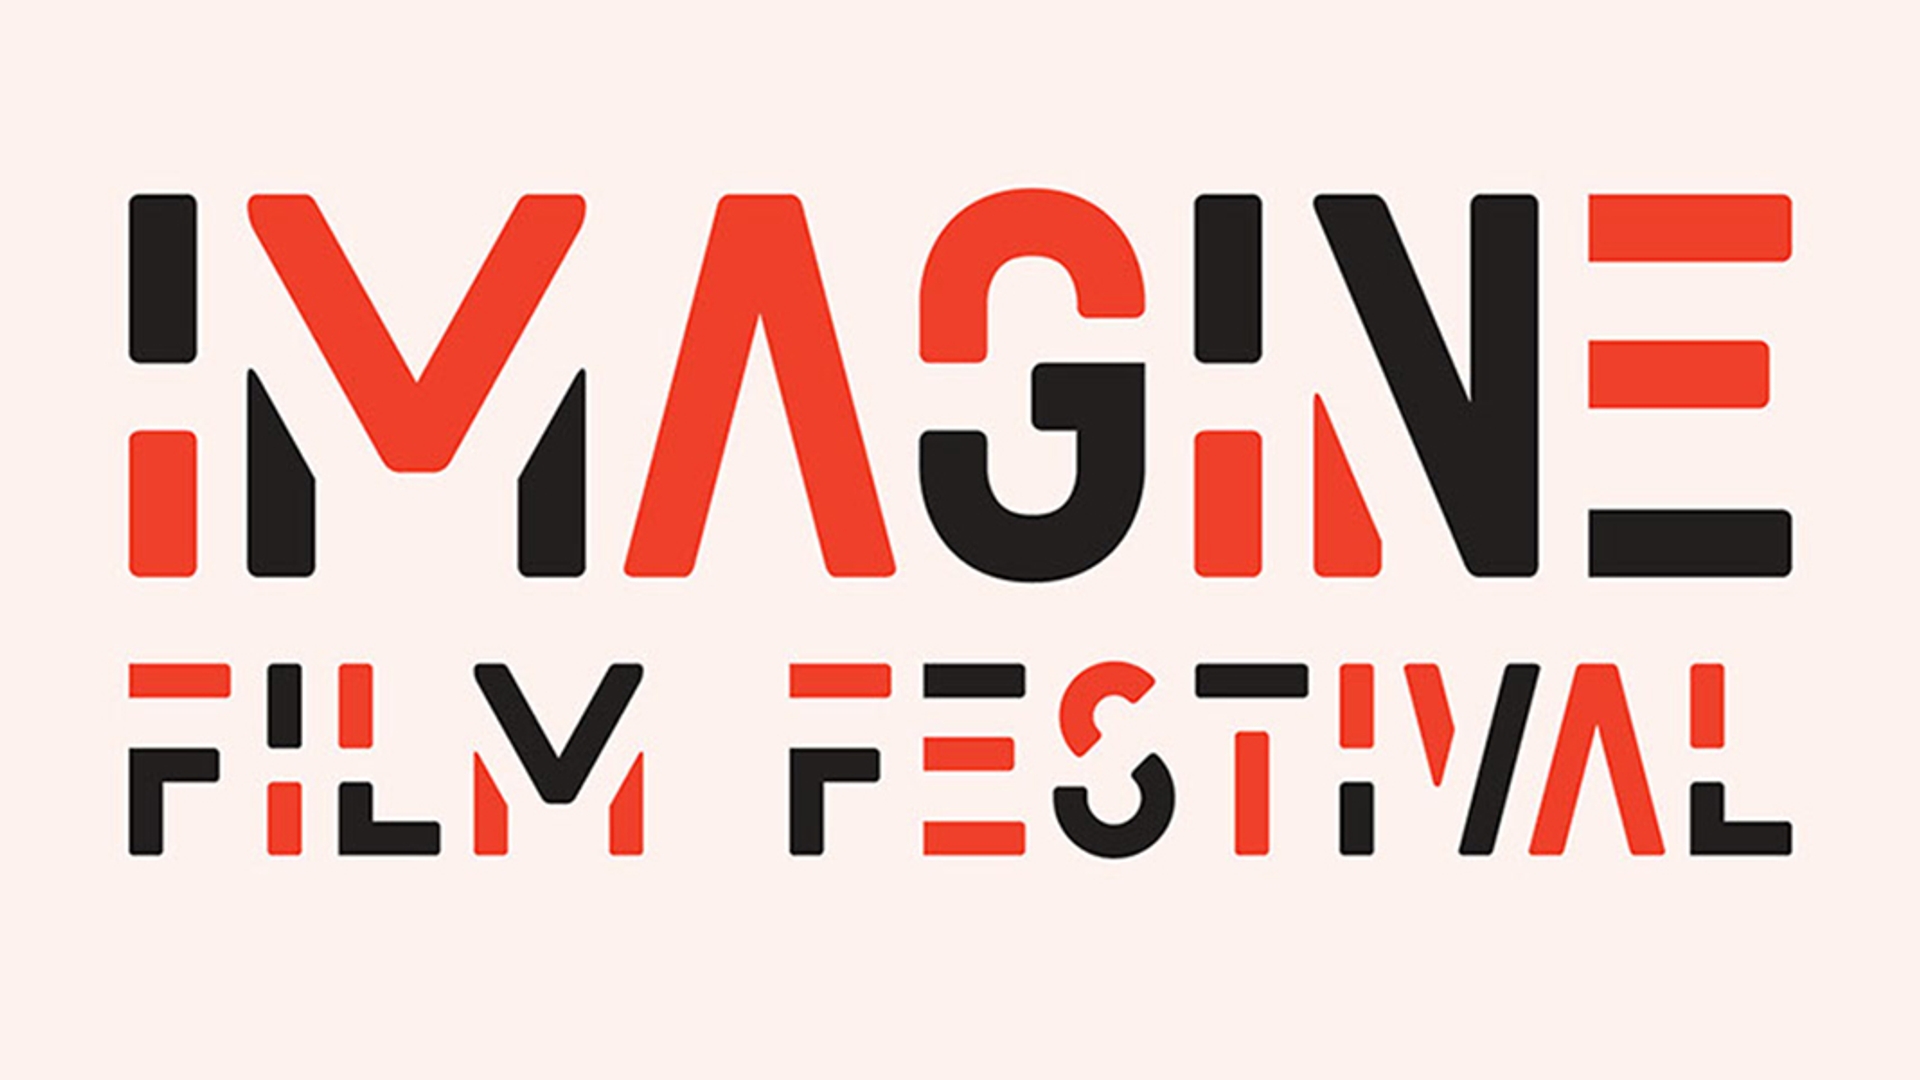 imagine film festival